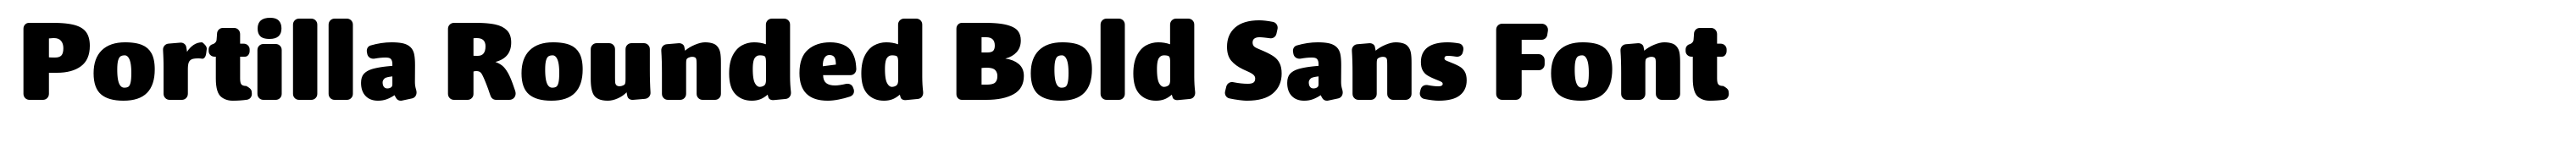 Portilla Rounded Bold Sans Font